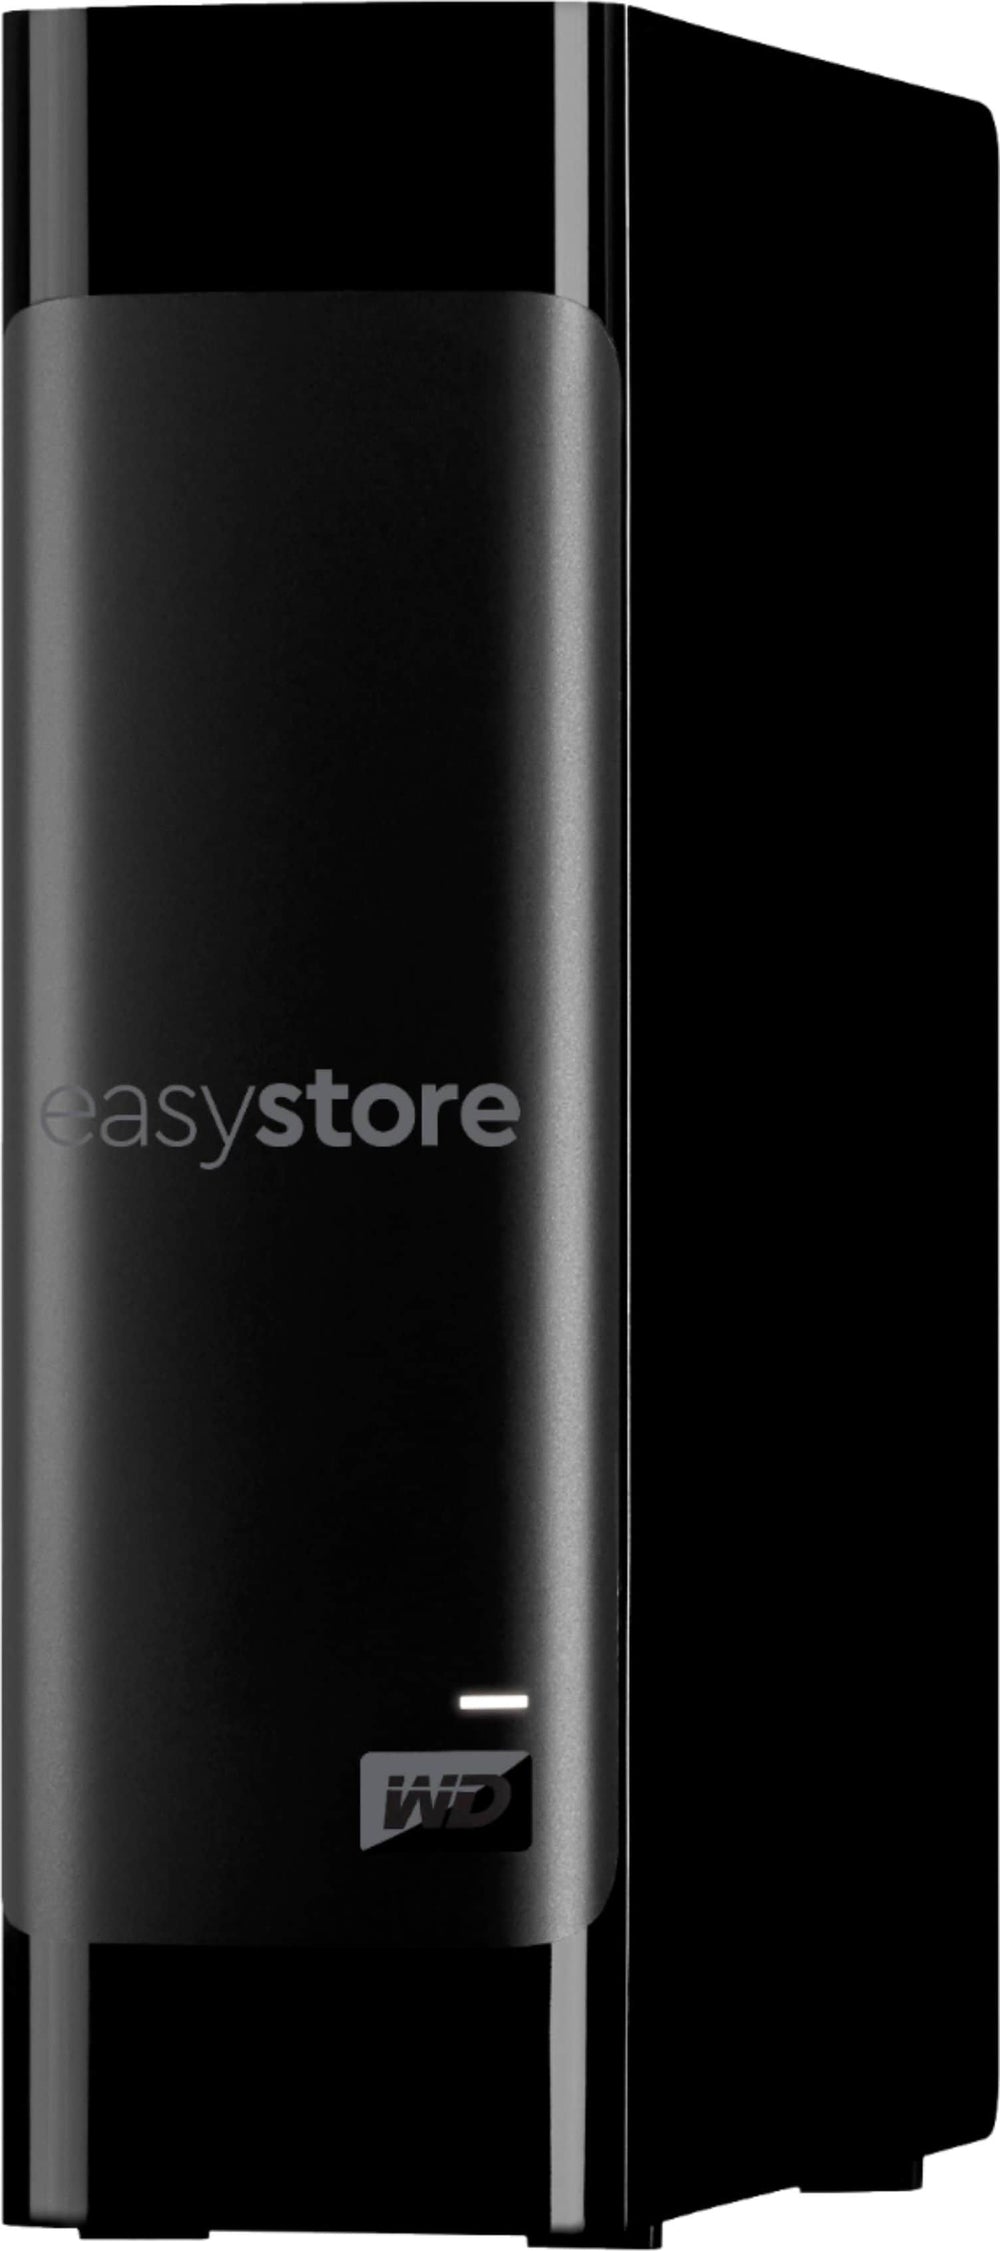 WD - easystore 14TB External USB 3.0 Hard Drive - Black_1